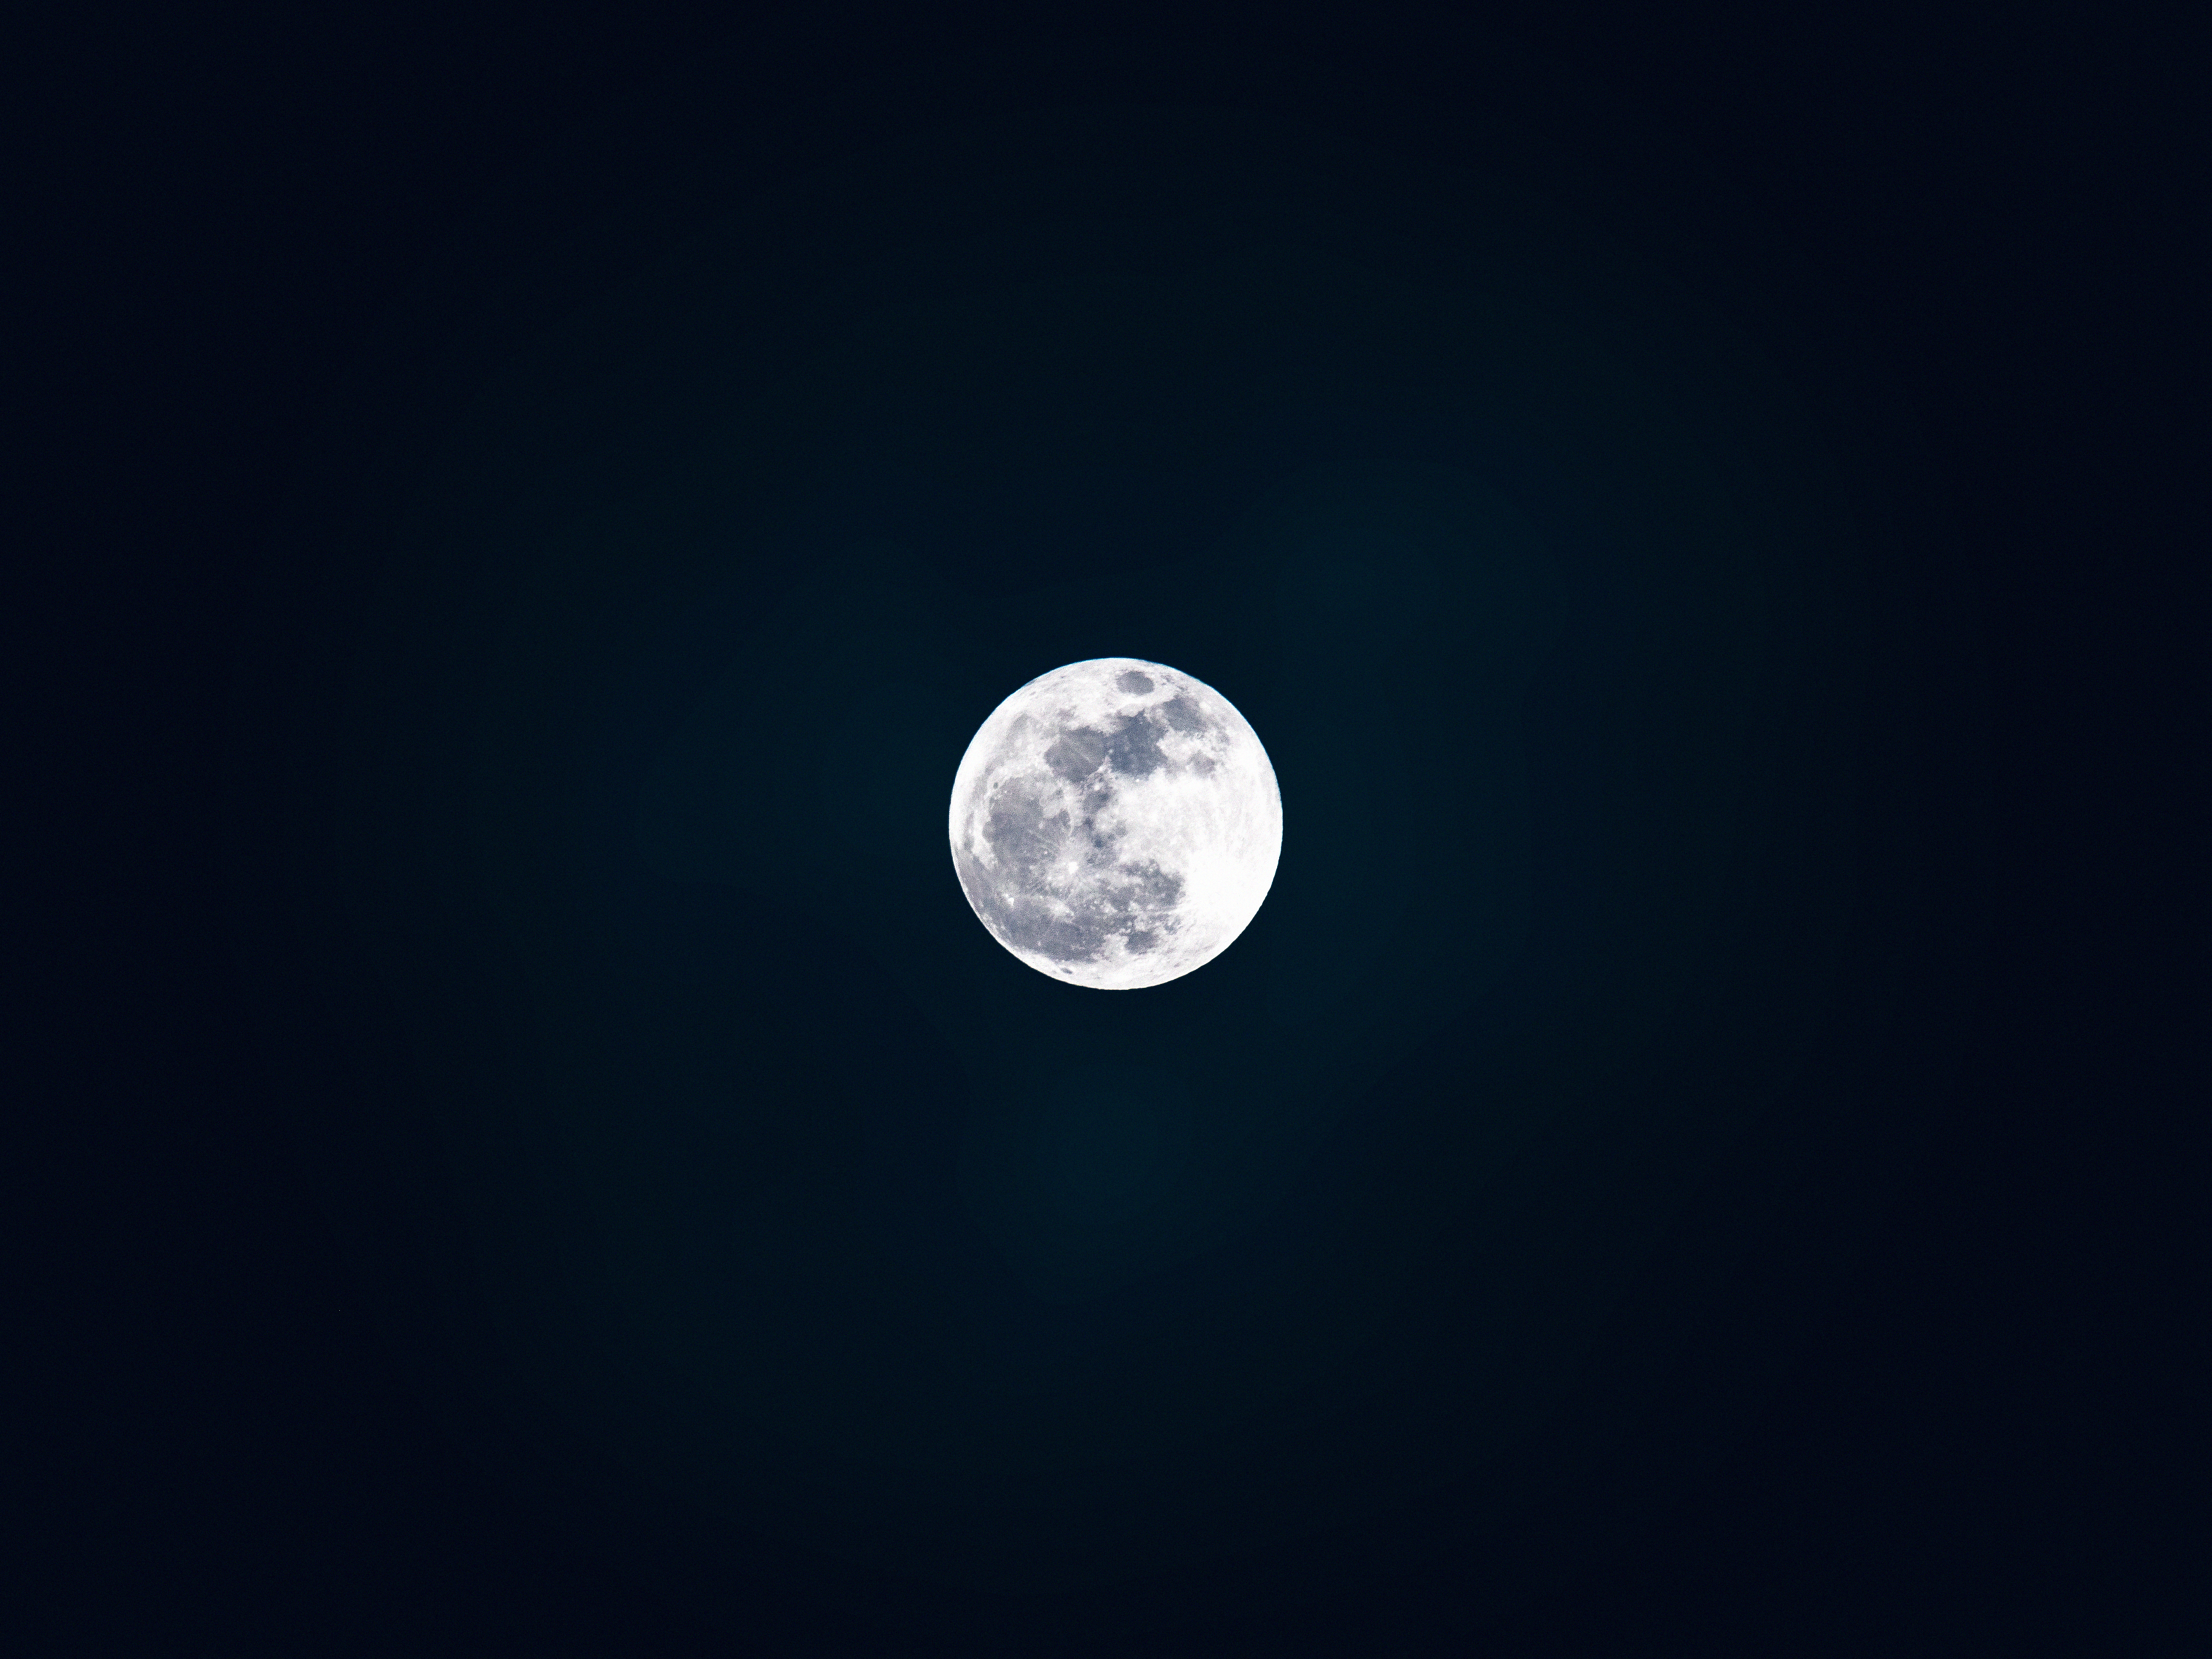 chb, full moon, satellite, universe, moon, dark, night, bw